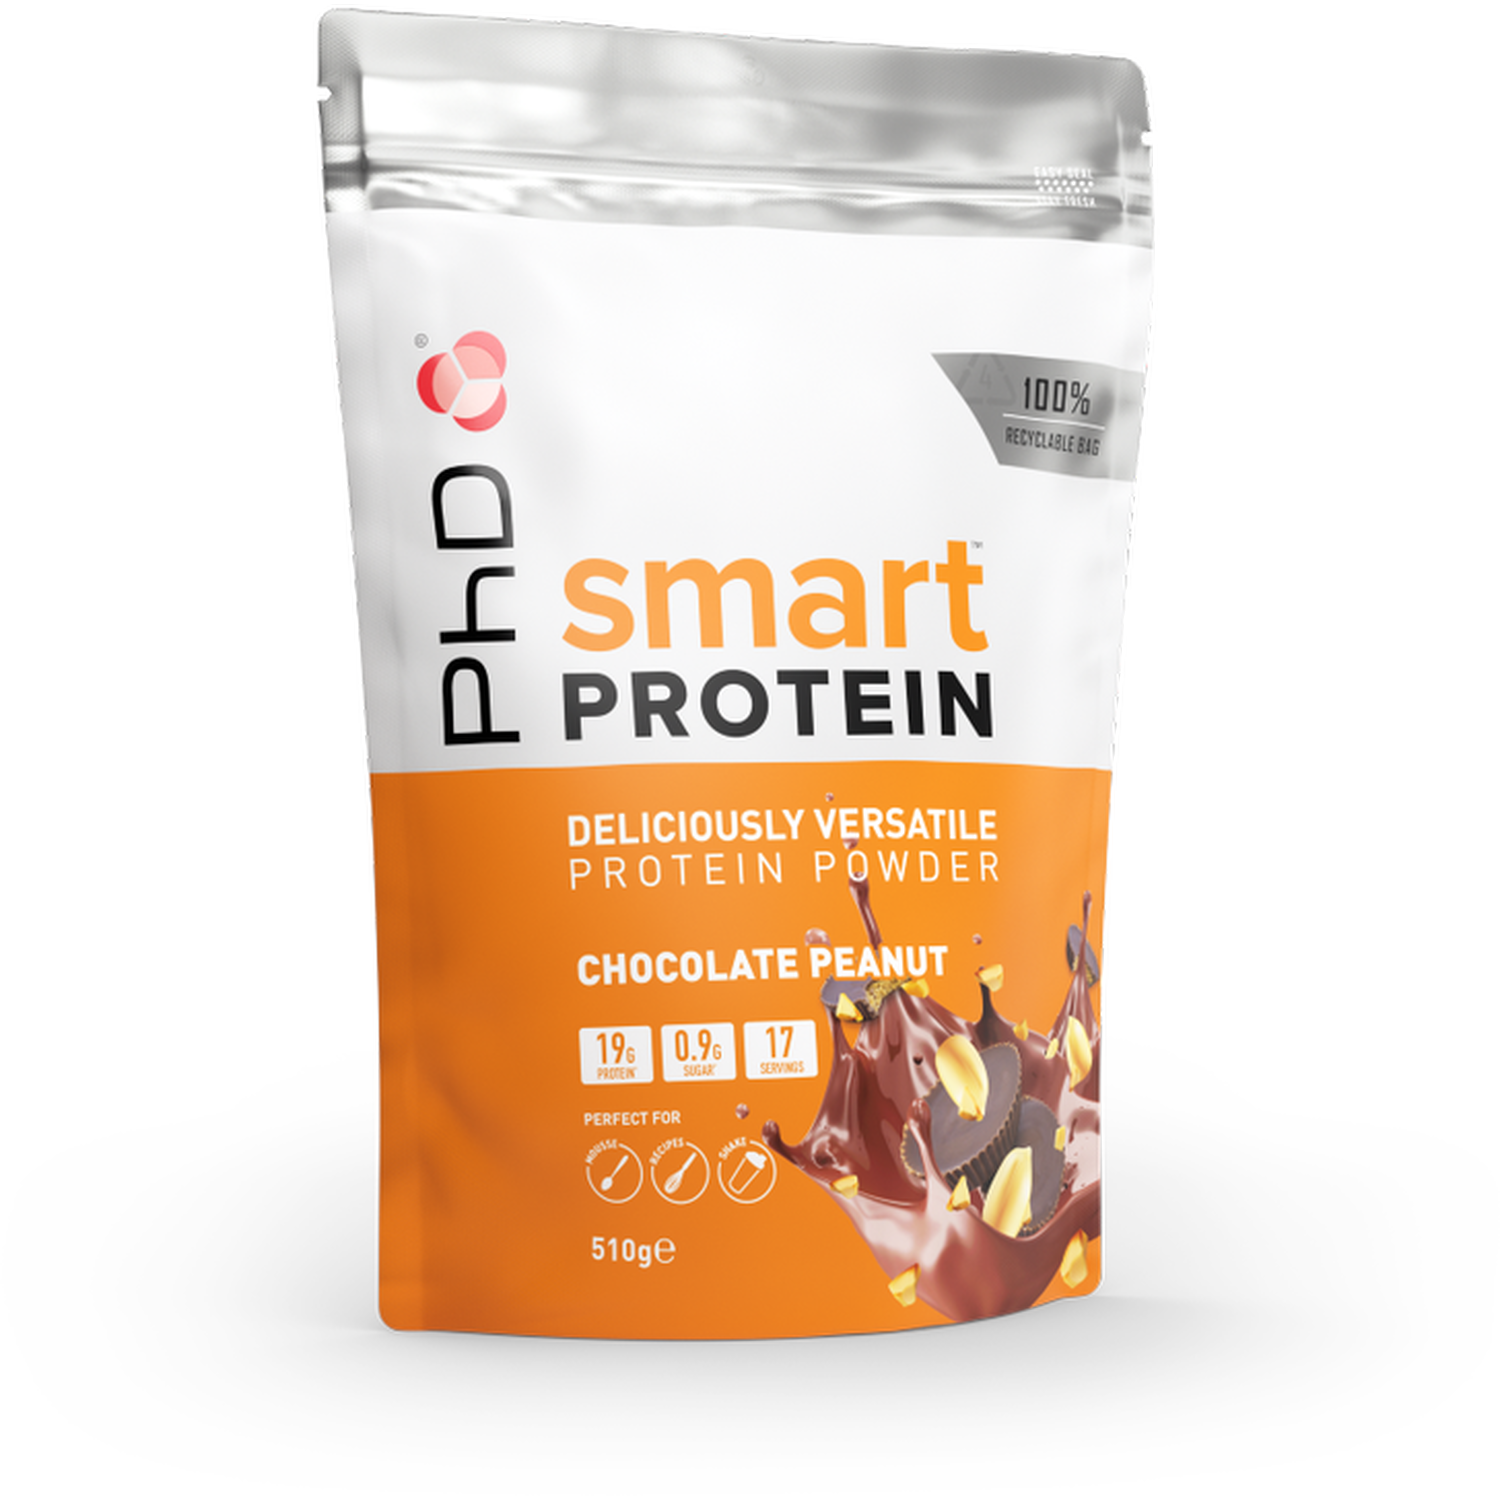 PhD Smart Protein Chocolate Peanut Protein Powder 510g Image